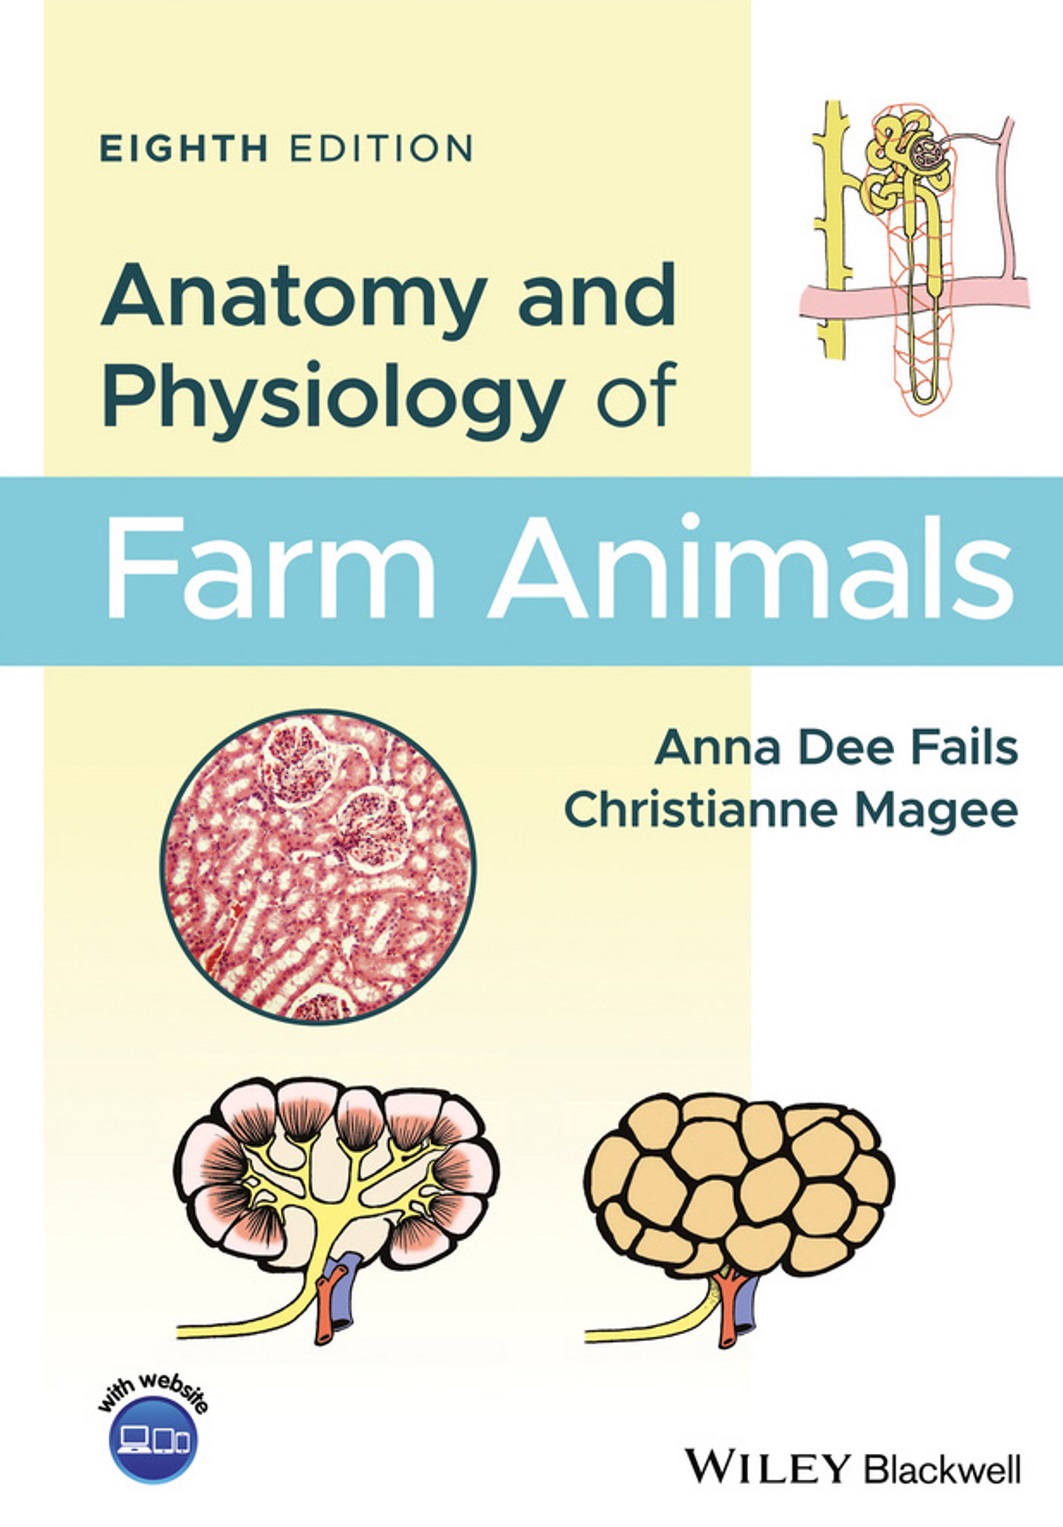 Anatomy and Physiology of Farm Animals 8th Edition | PDF Lobby